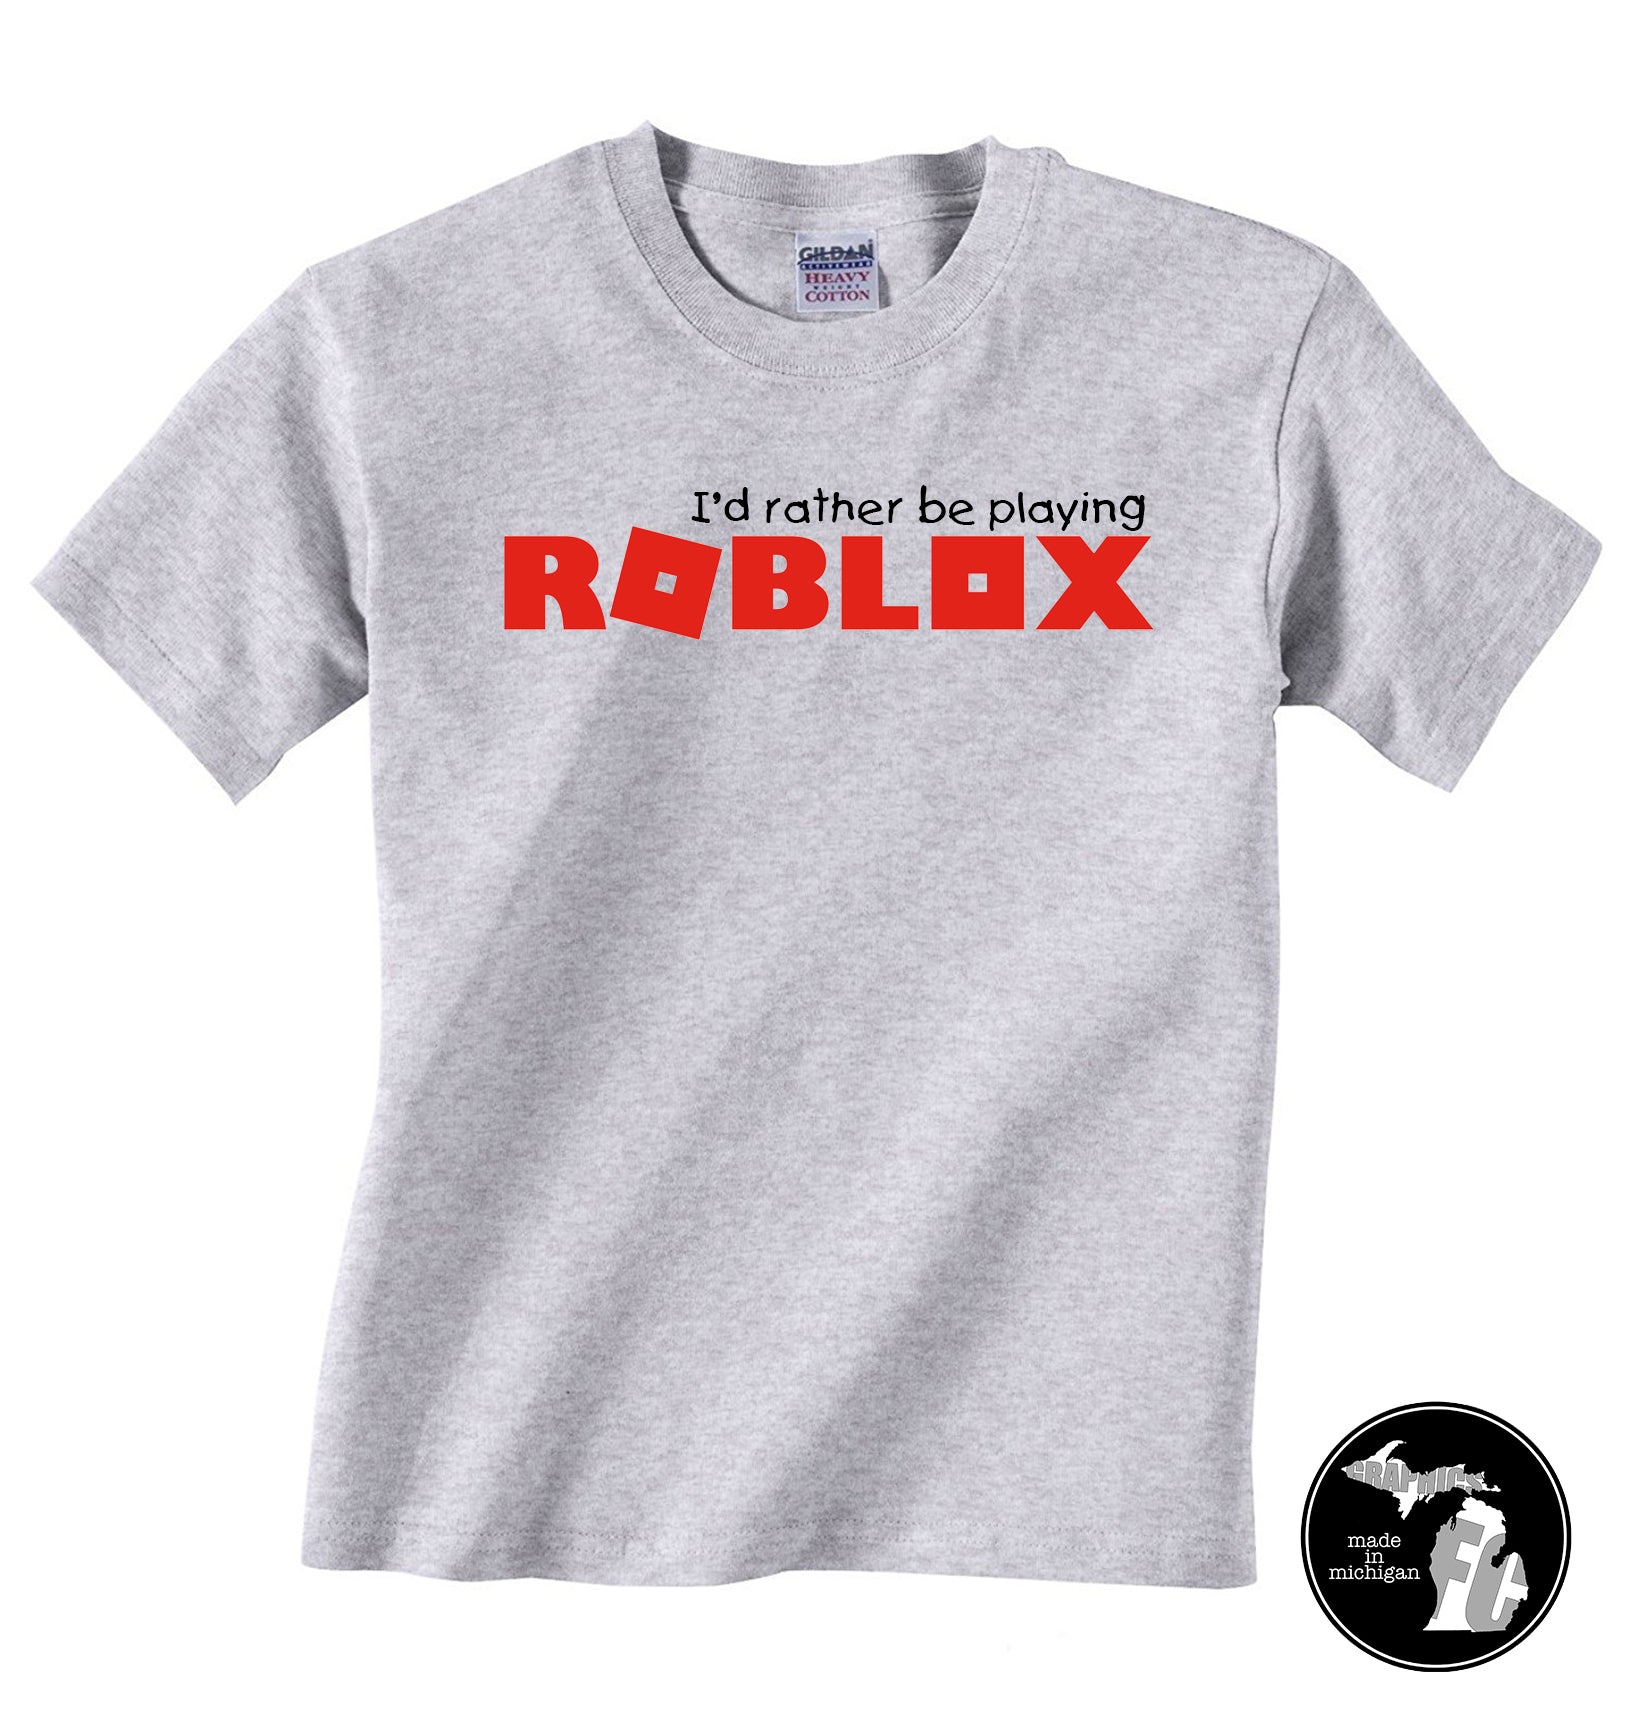 roblox shirt ids our t shirt